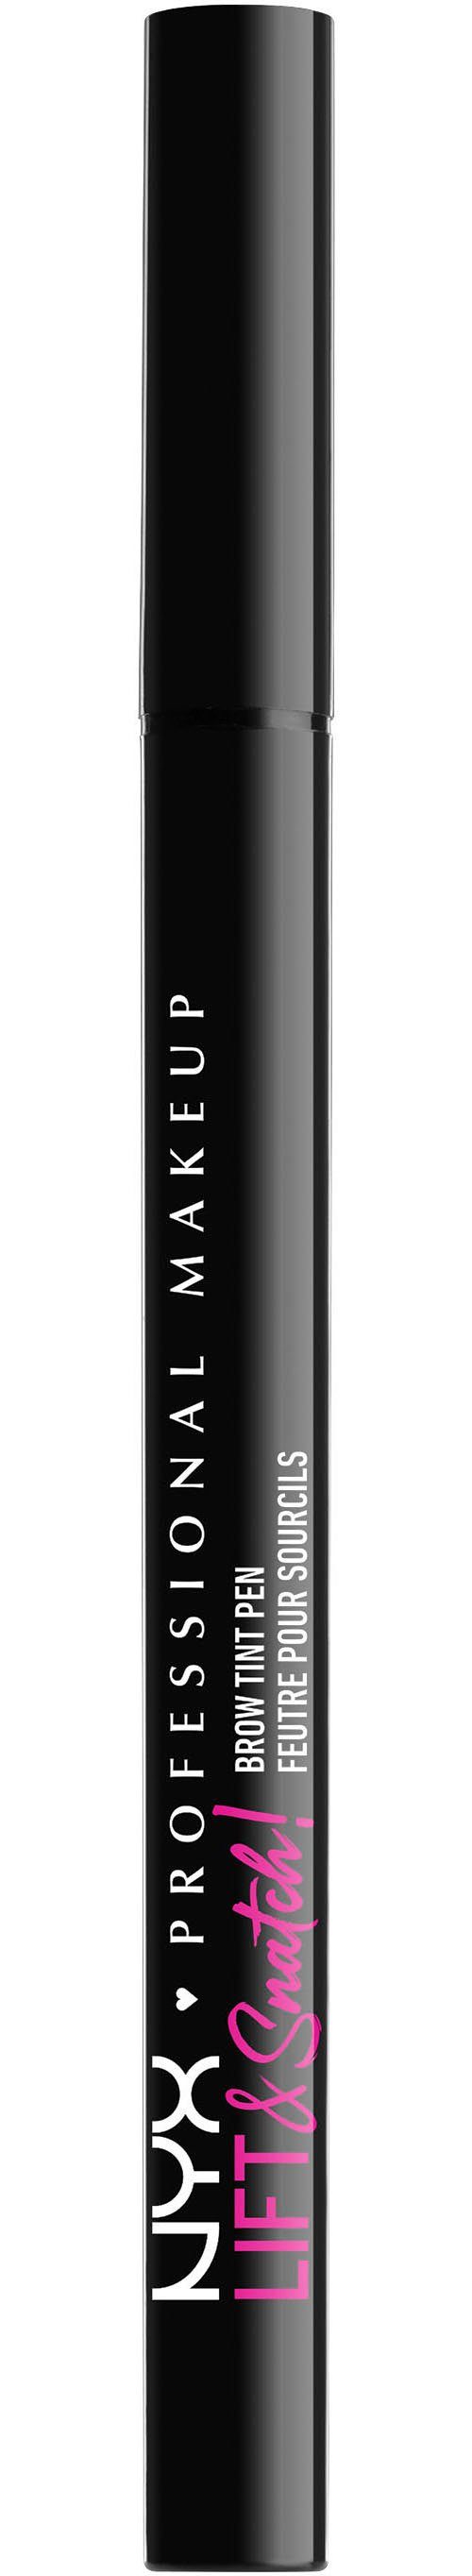 NYX Augenbrauen-Stift Professional Lift ash brown Tint Pen Snatch Brow Makeup &